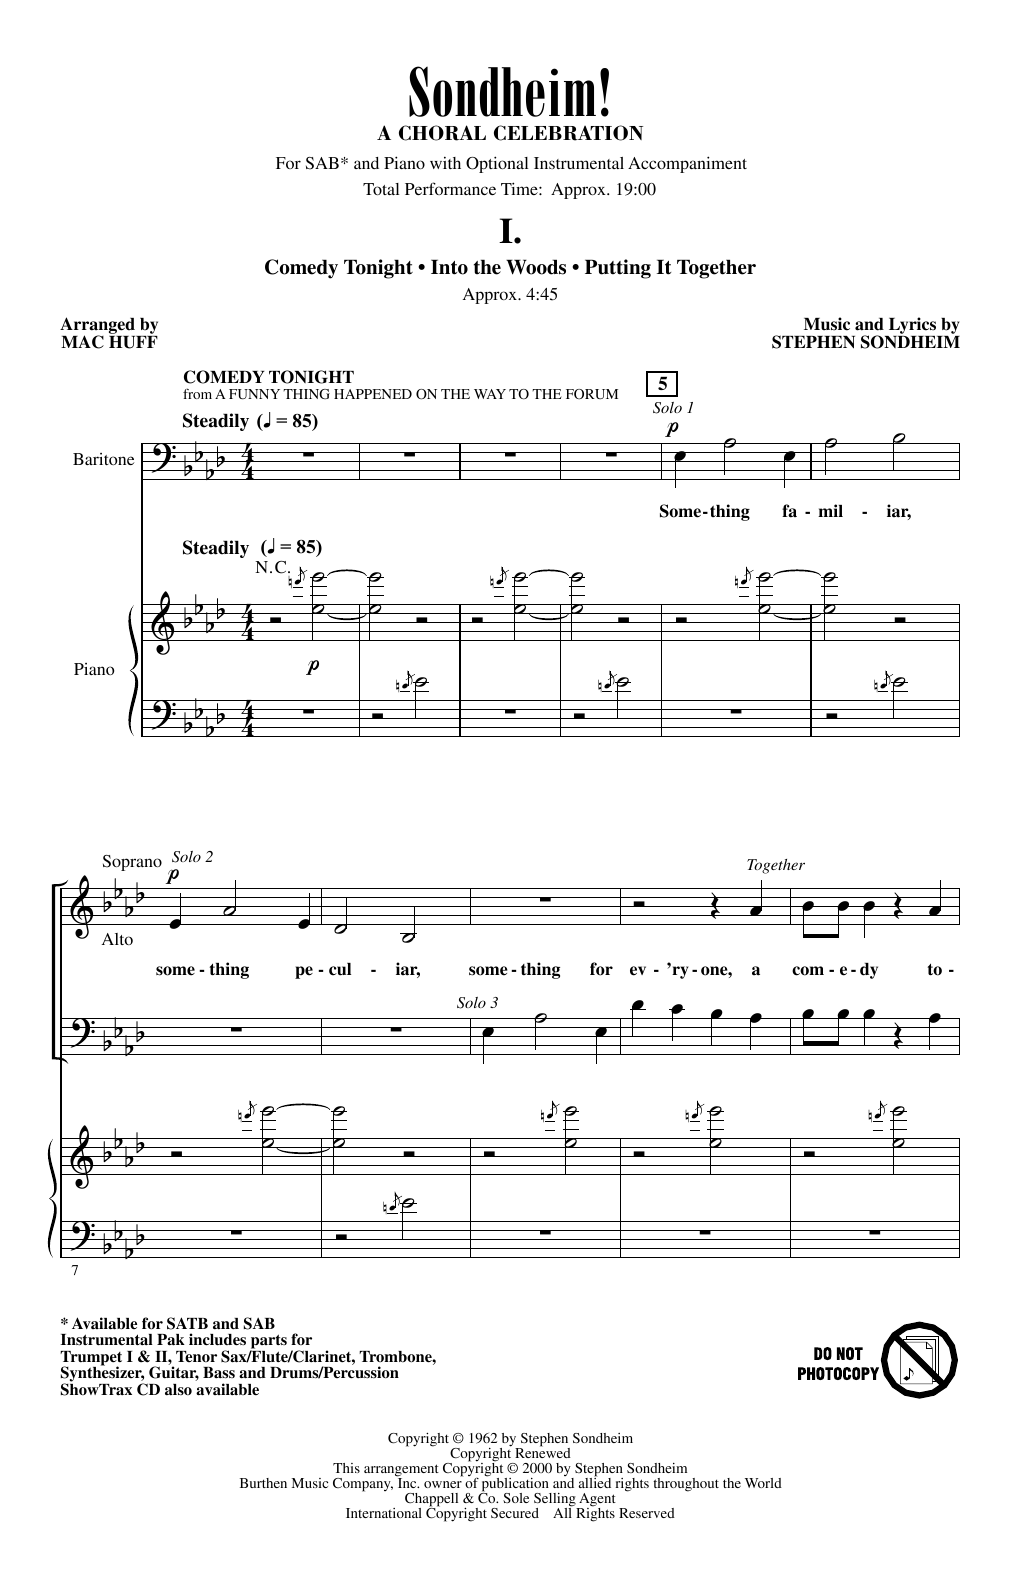 Stephen Sondheim Sondheim! A Choral Celebration (Medley) (arr. Mac Huff) sheet music notes and chords arranged for SAB Choir